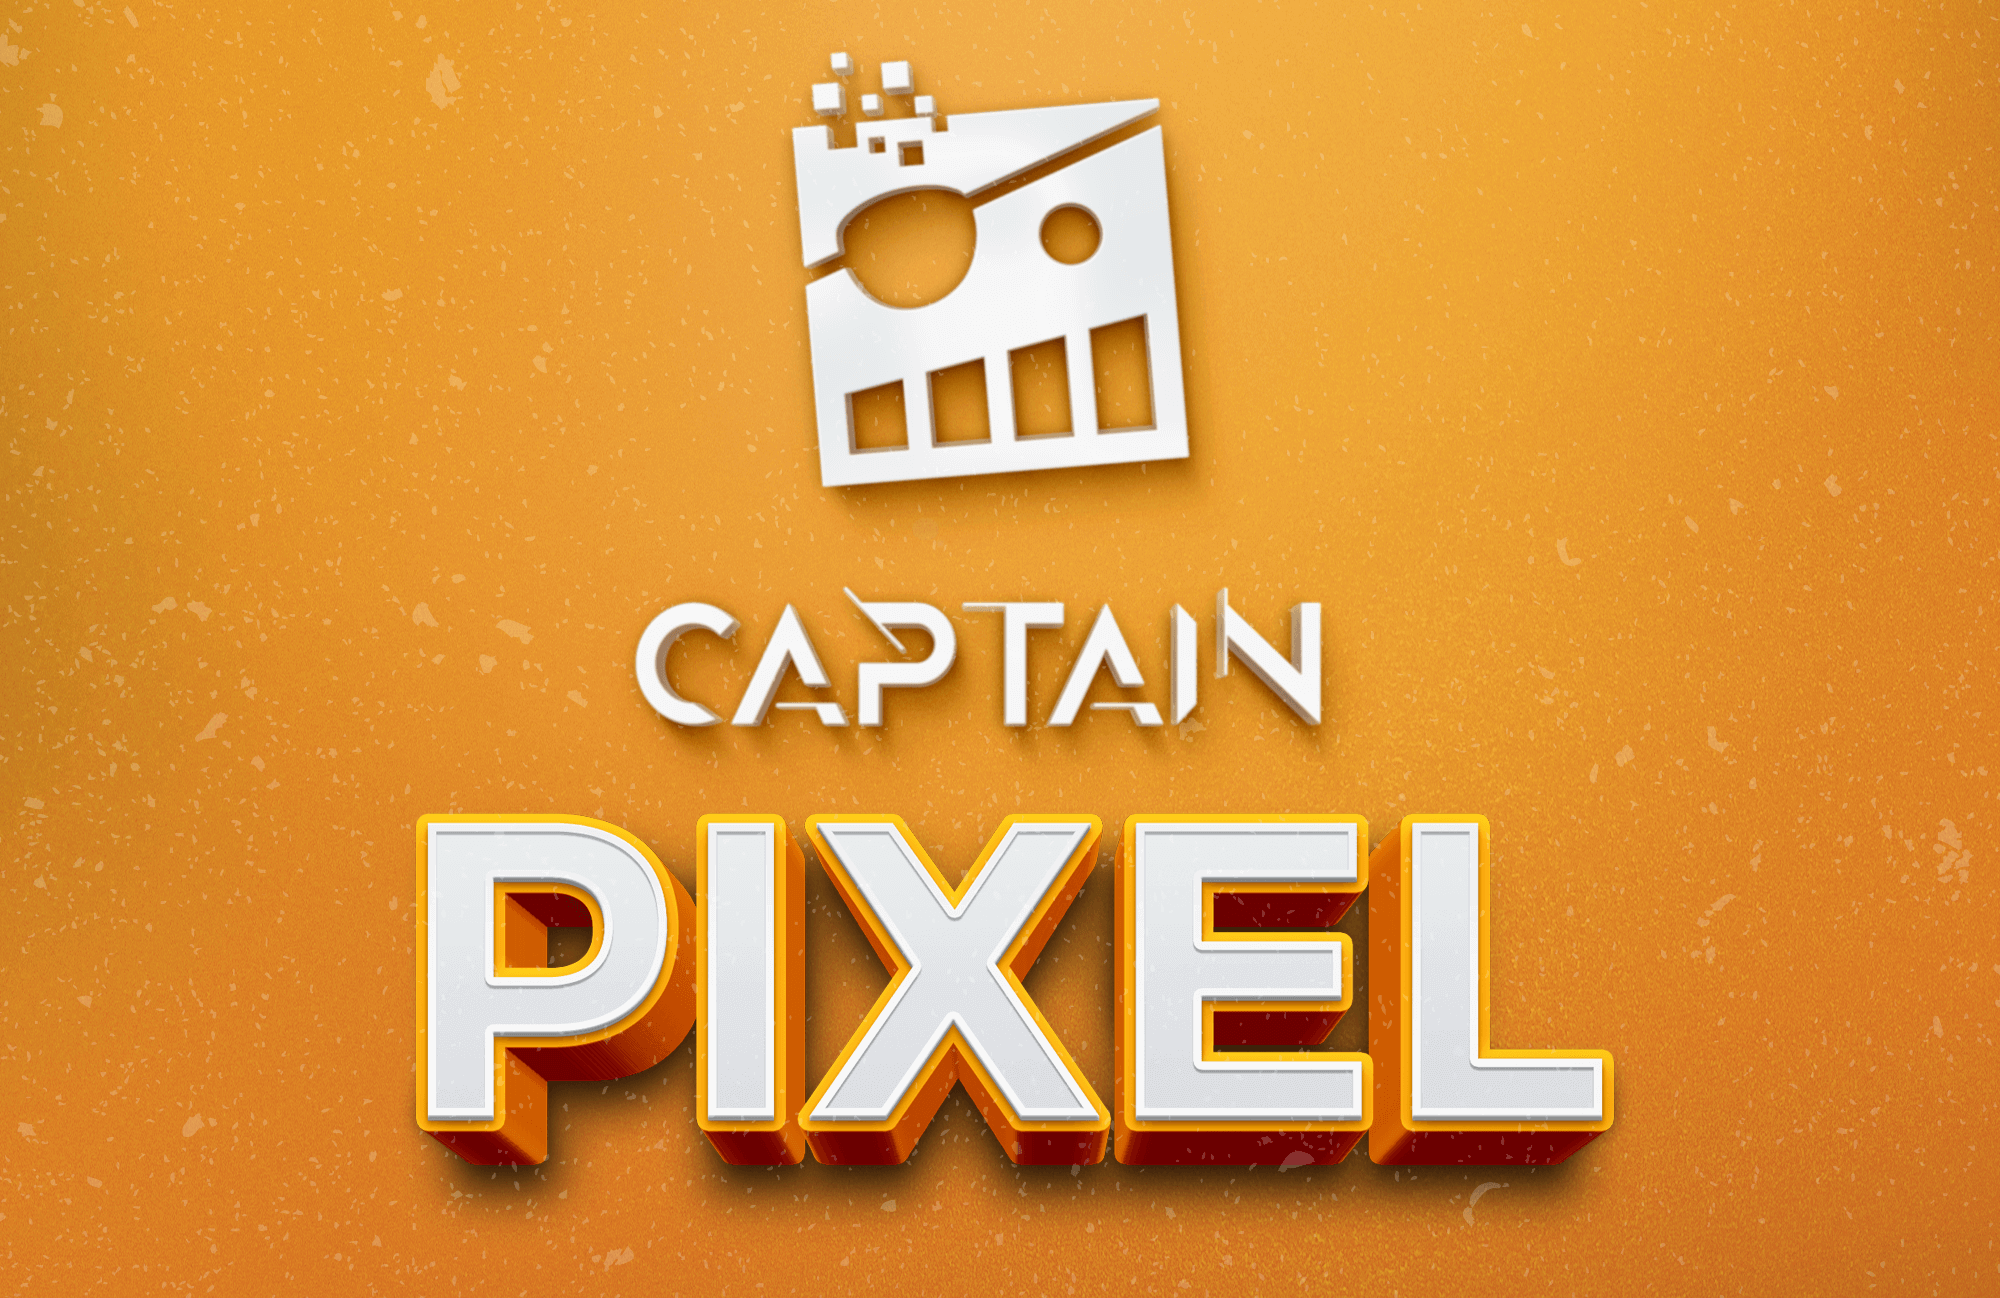 Captain Pixel